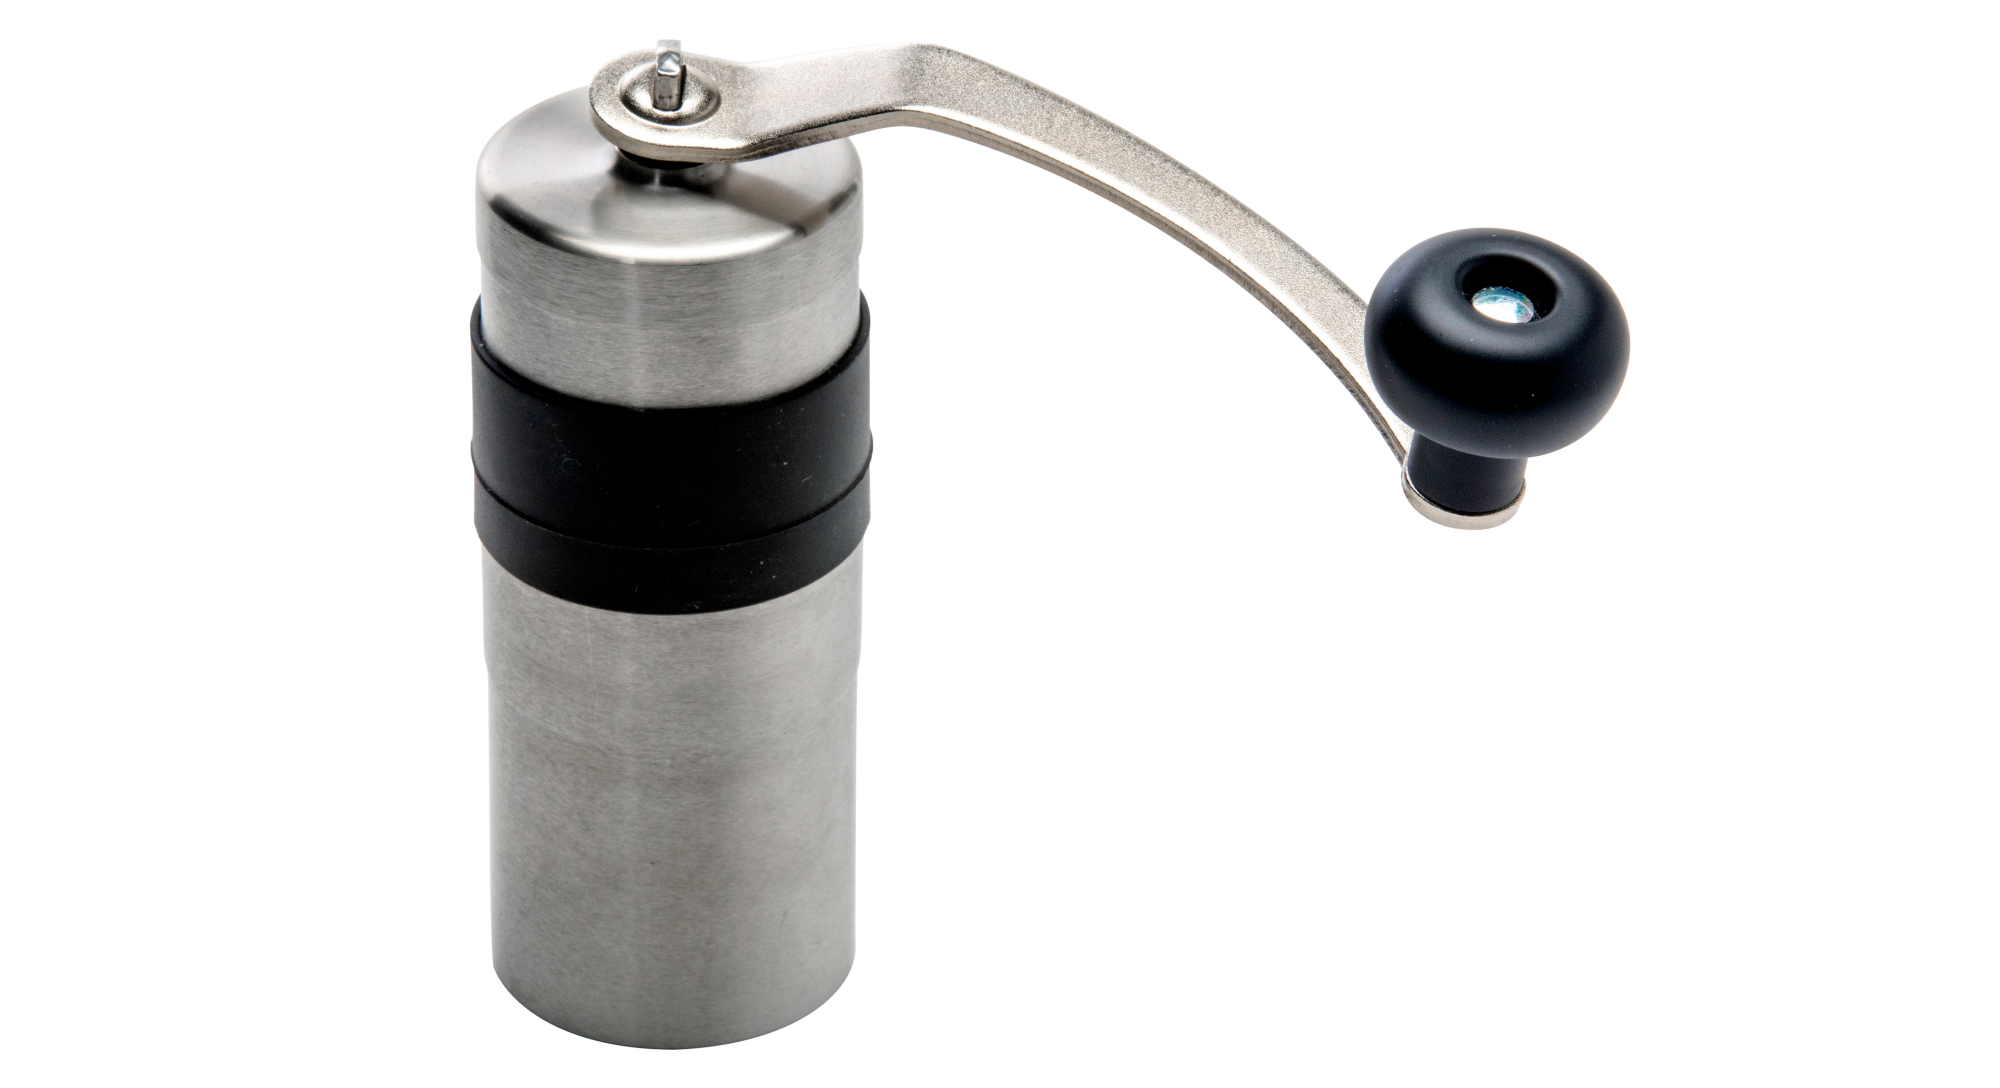 A silver and black Porlex mini grinder 